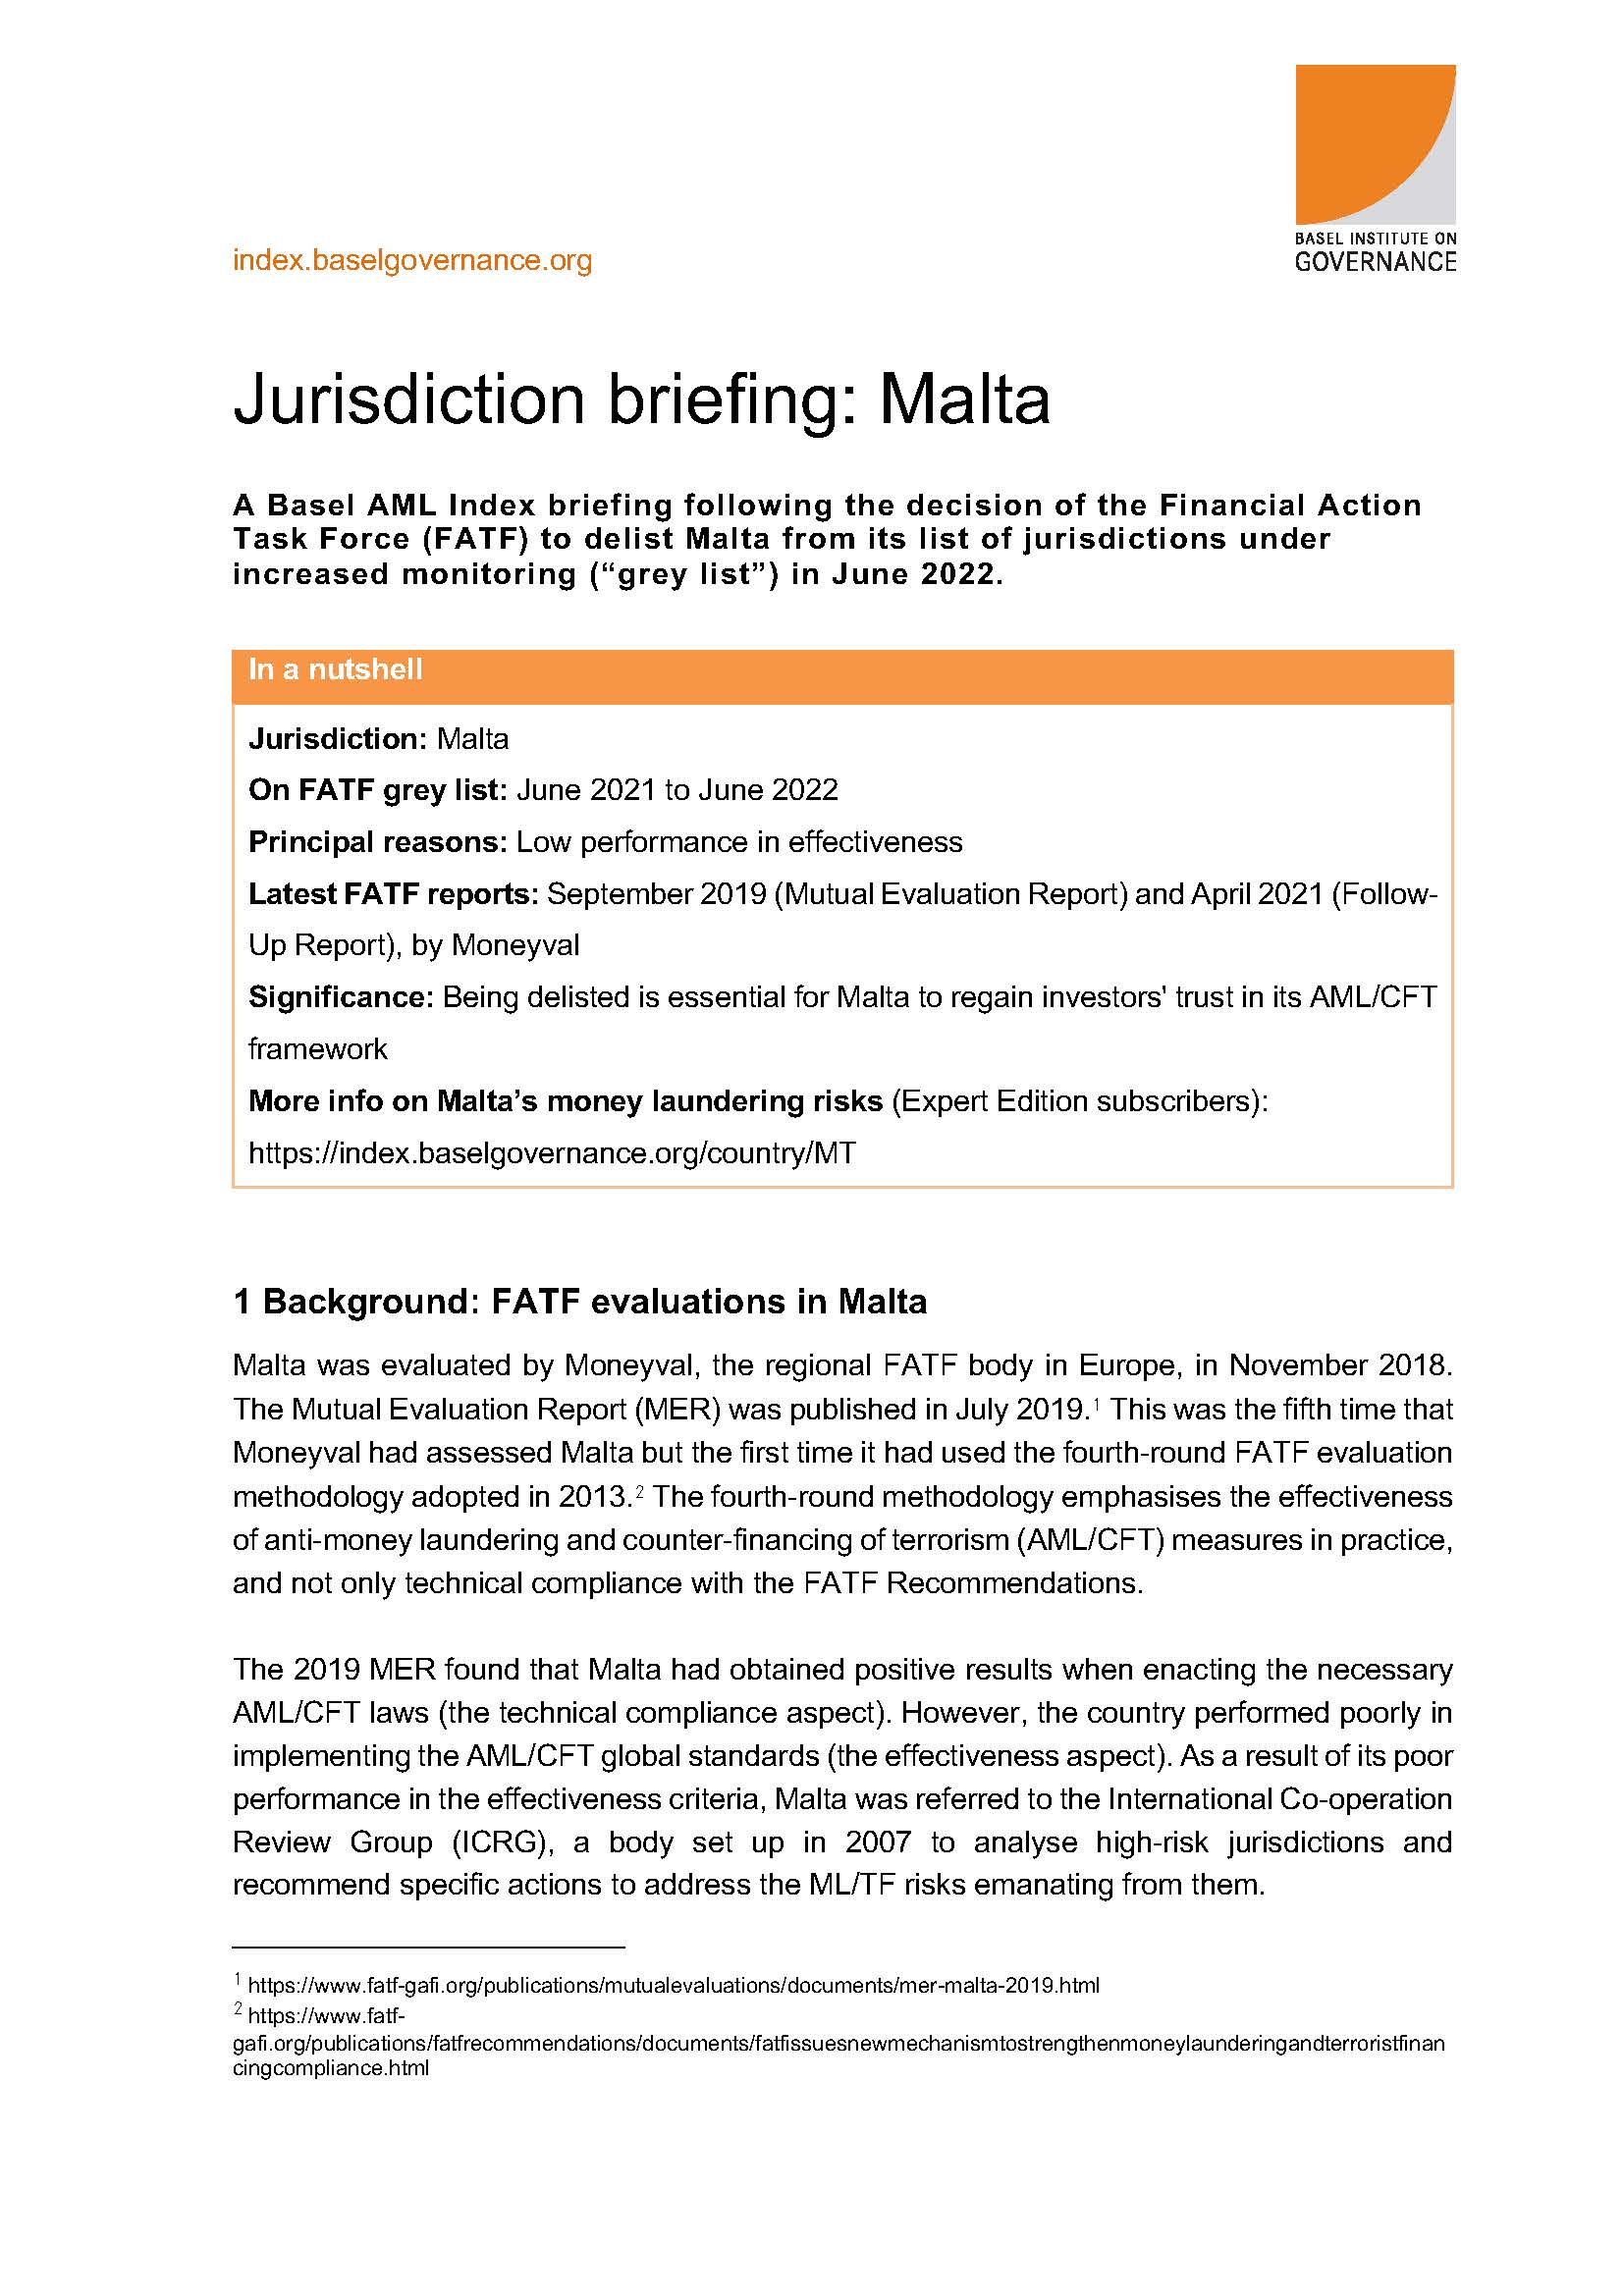 Jurisdiction briefing Malta